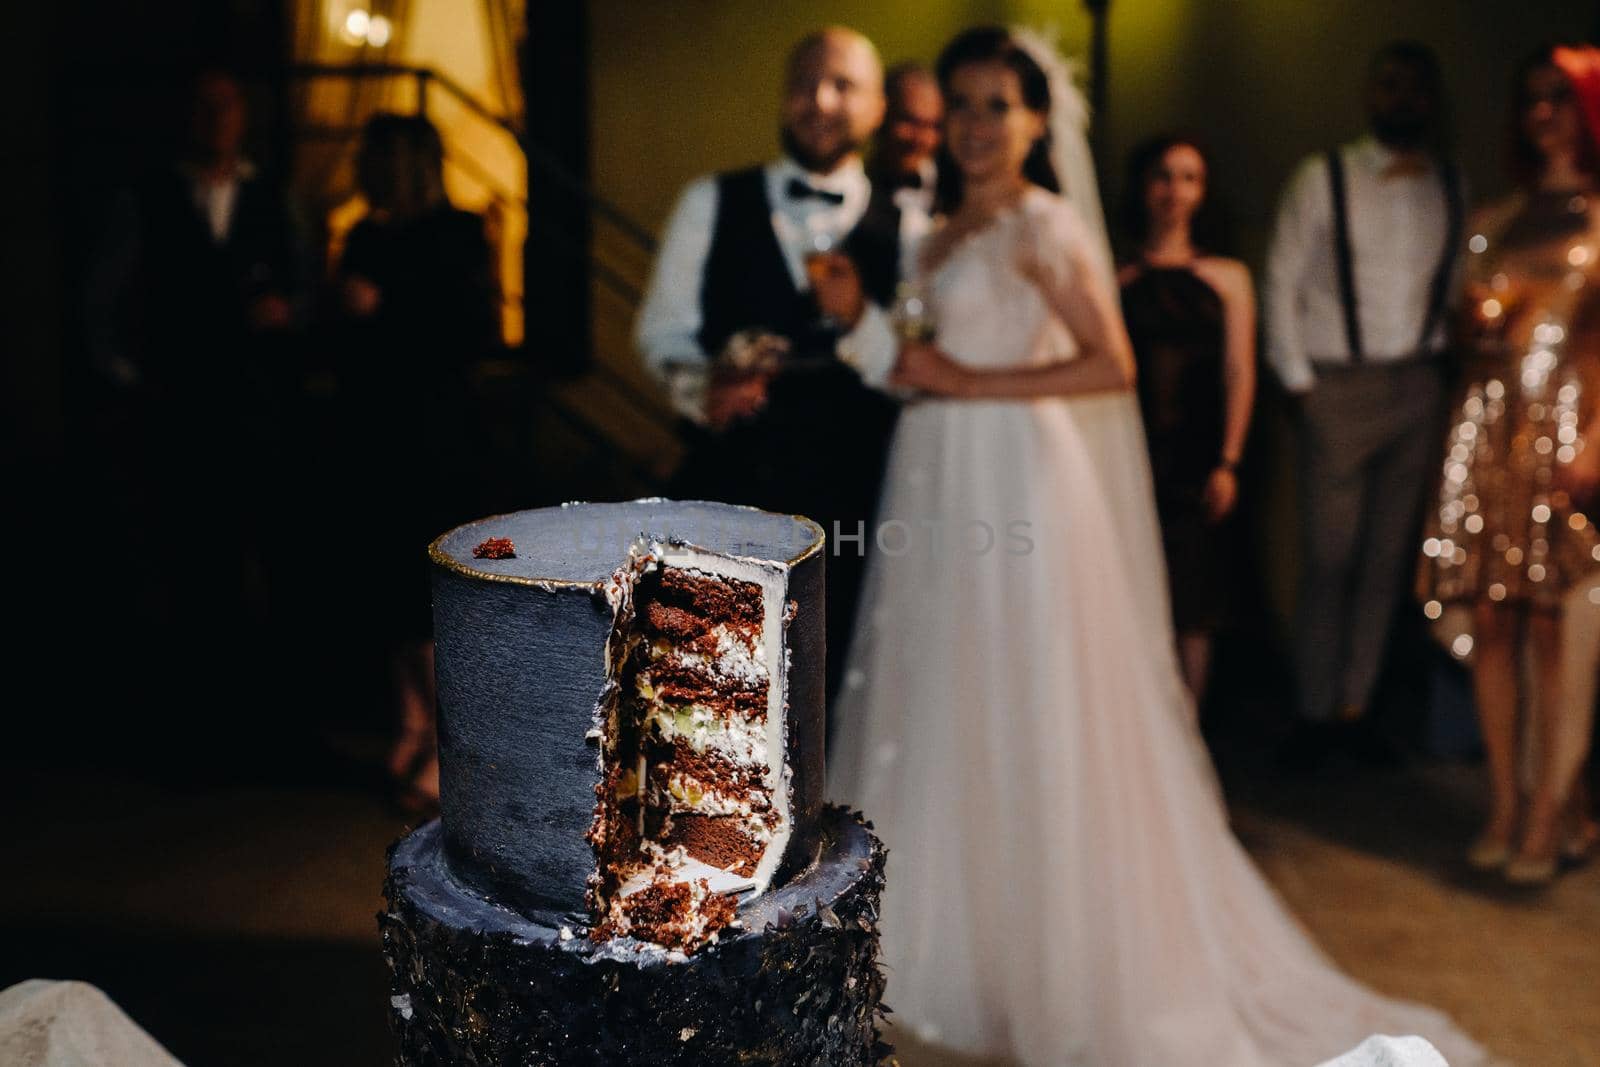 A close-up cut of a wedding cake at a wedding.